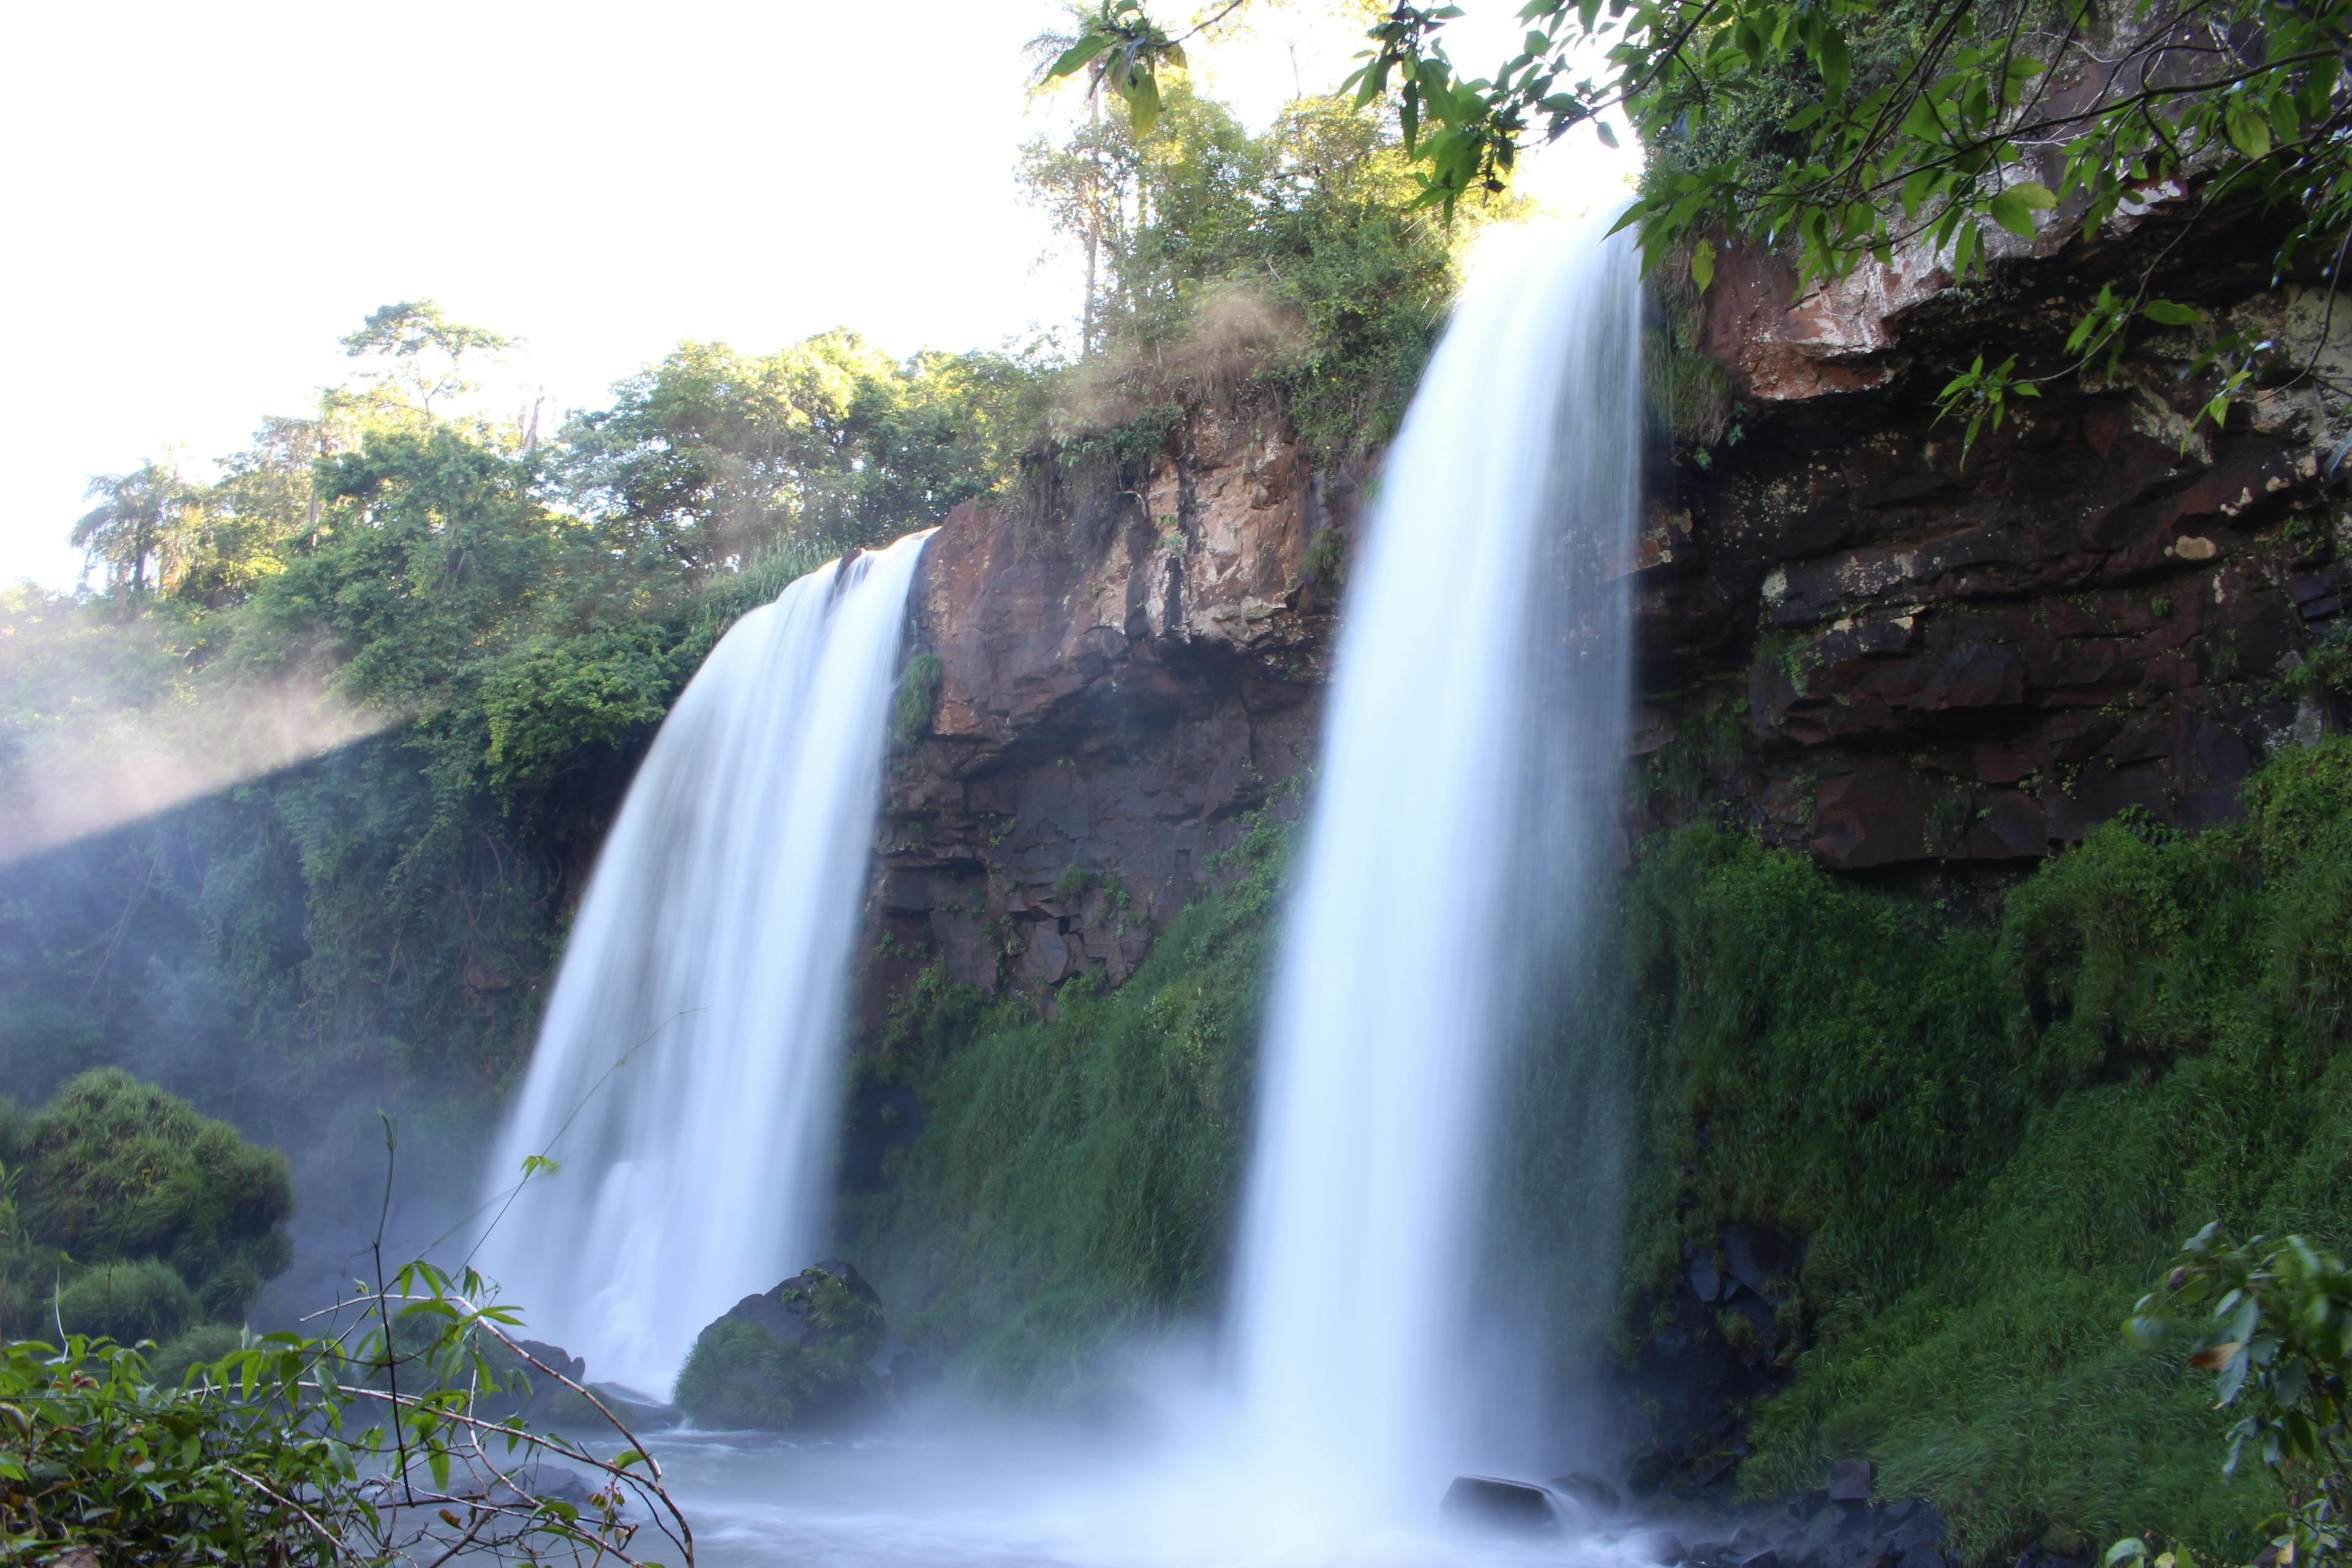 Time lapse of Iguazú Falls